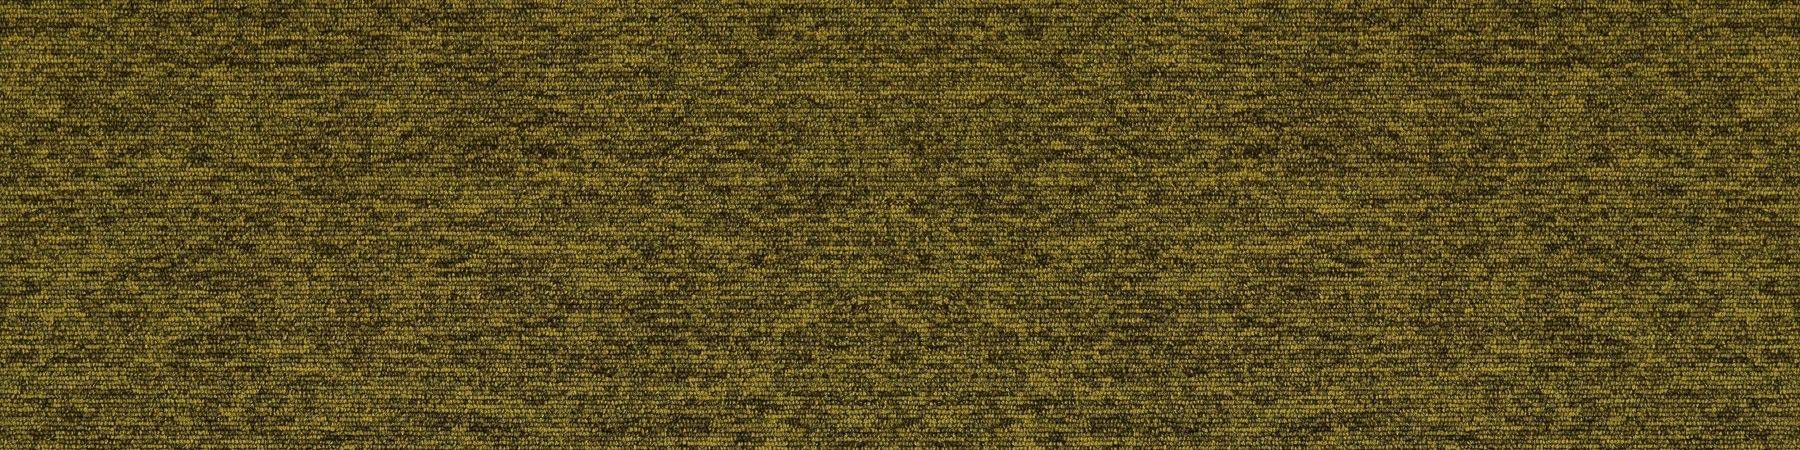 Burmatex Tivoli Heavy Contract Carpet Planks Tiki Yellow 21166